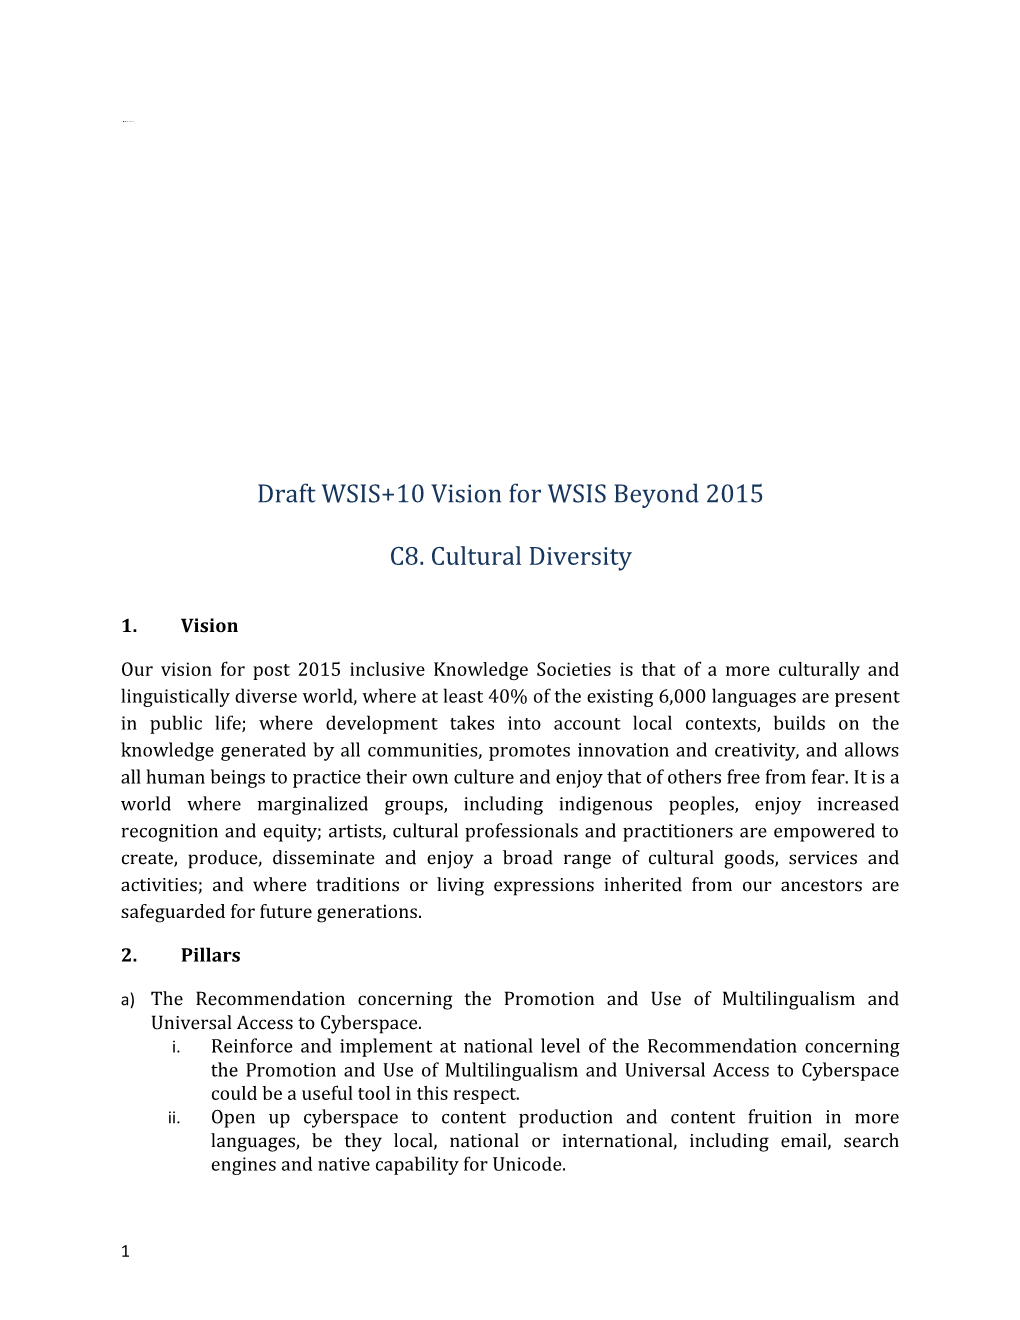 Draft WSIS+10 Vision for WSIS Beyond 2015 s1